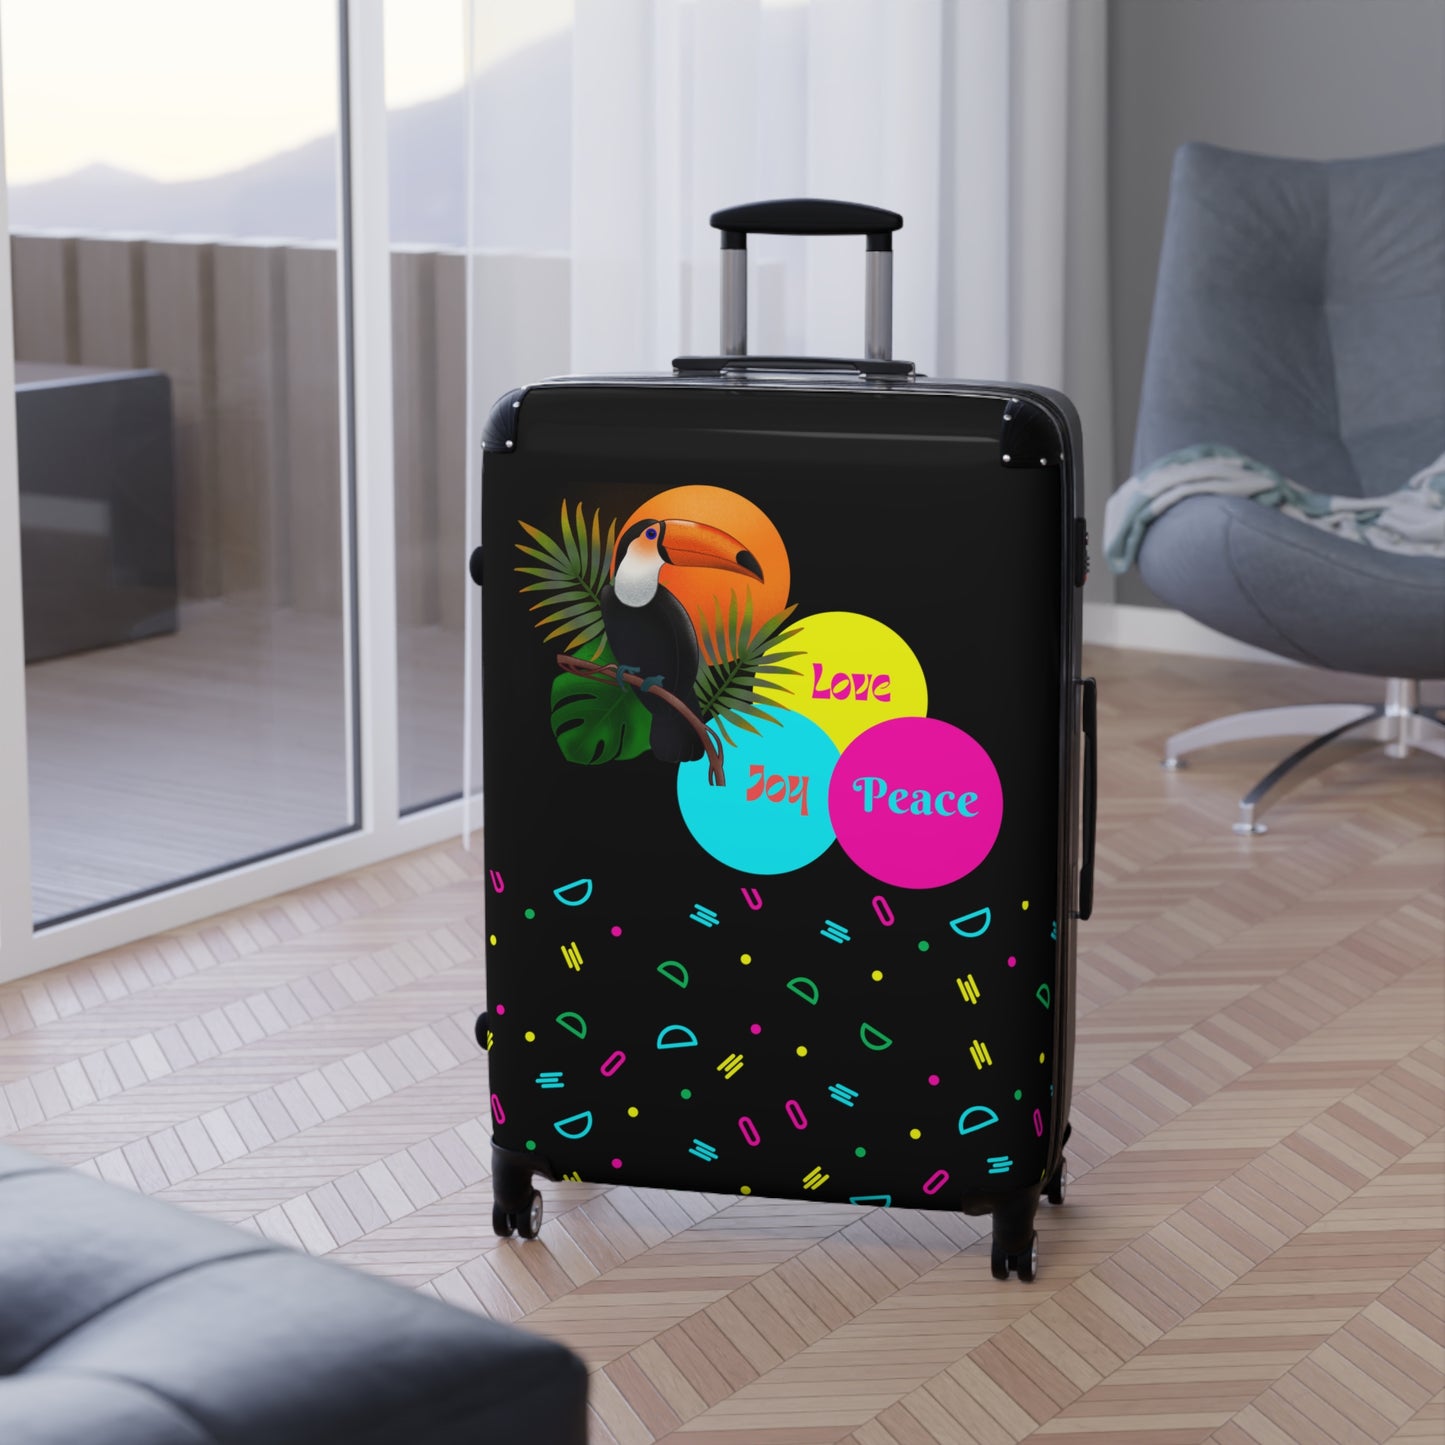 Inspirational Luggage, Holidays Suitcase,  Positive Hard Shell Trolley